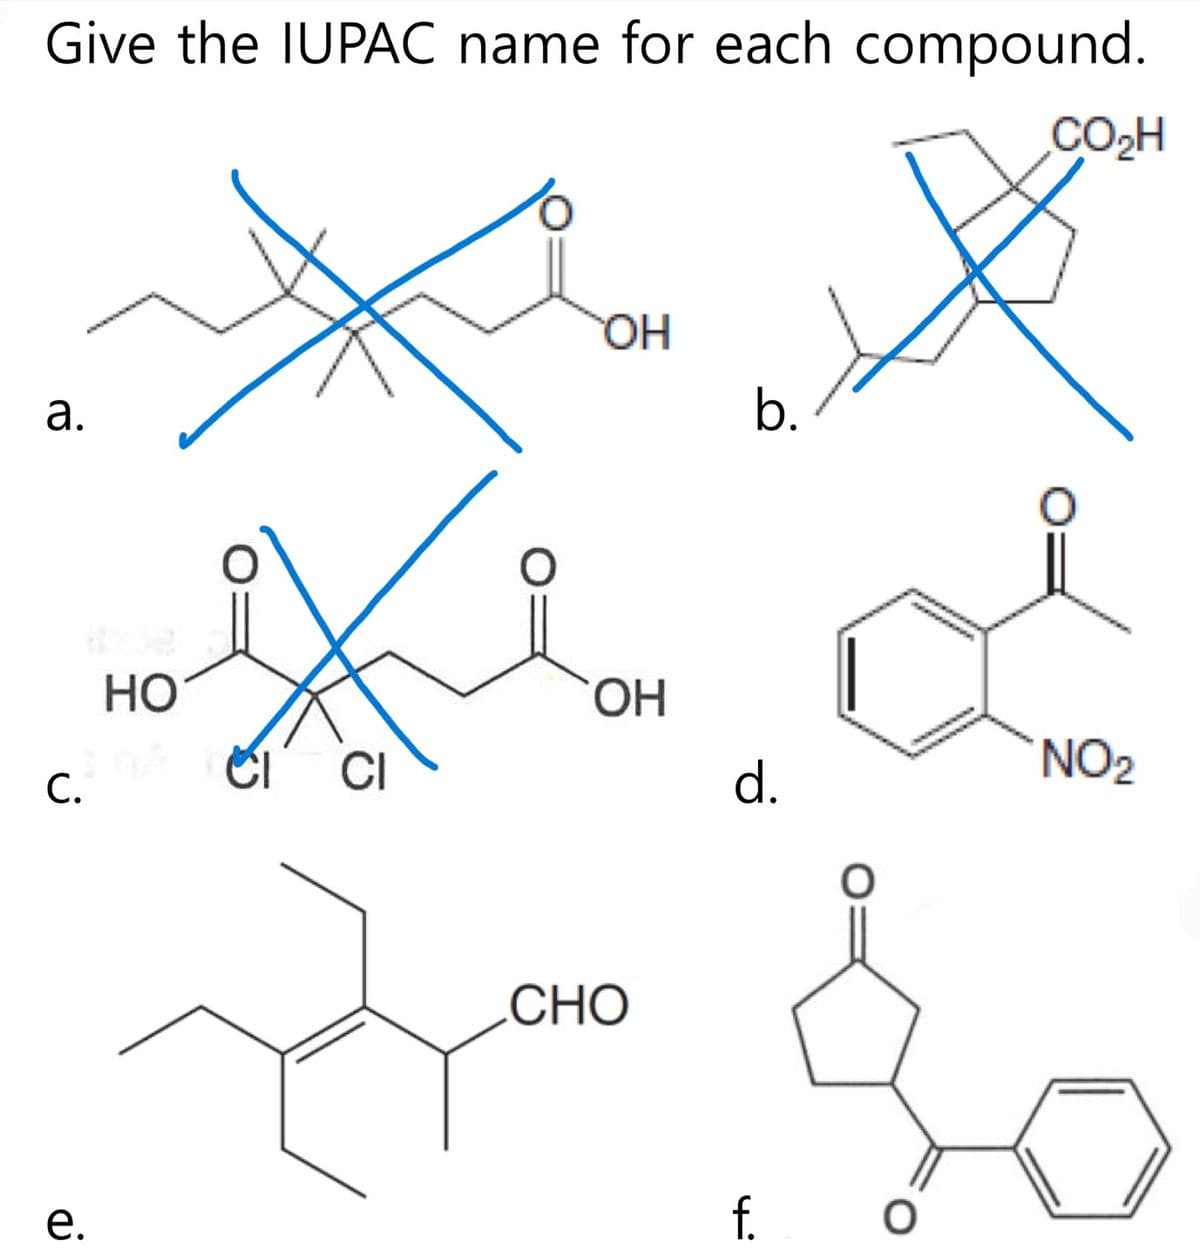 Give the IUPAC name for each compound.
a.
C.
e.
HO
CI
O
OH
OH
CHO
b.
d.
f.
CO₂H
NO₂
2